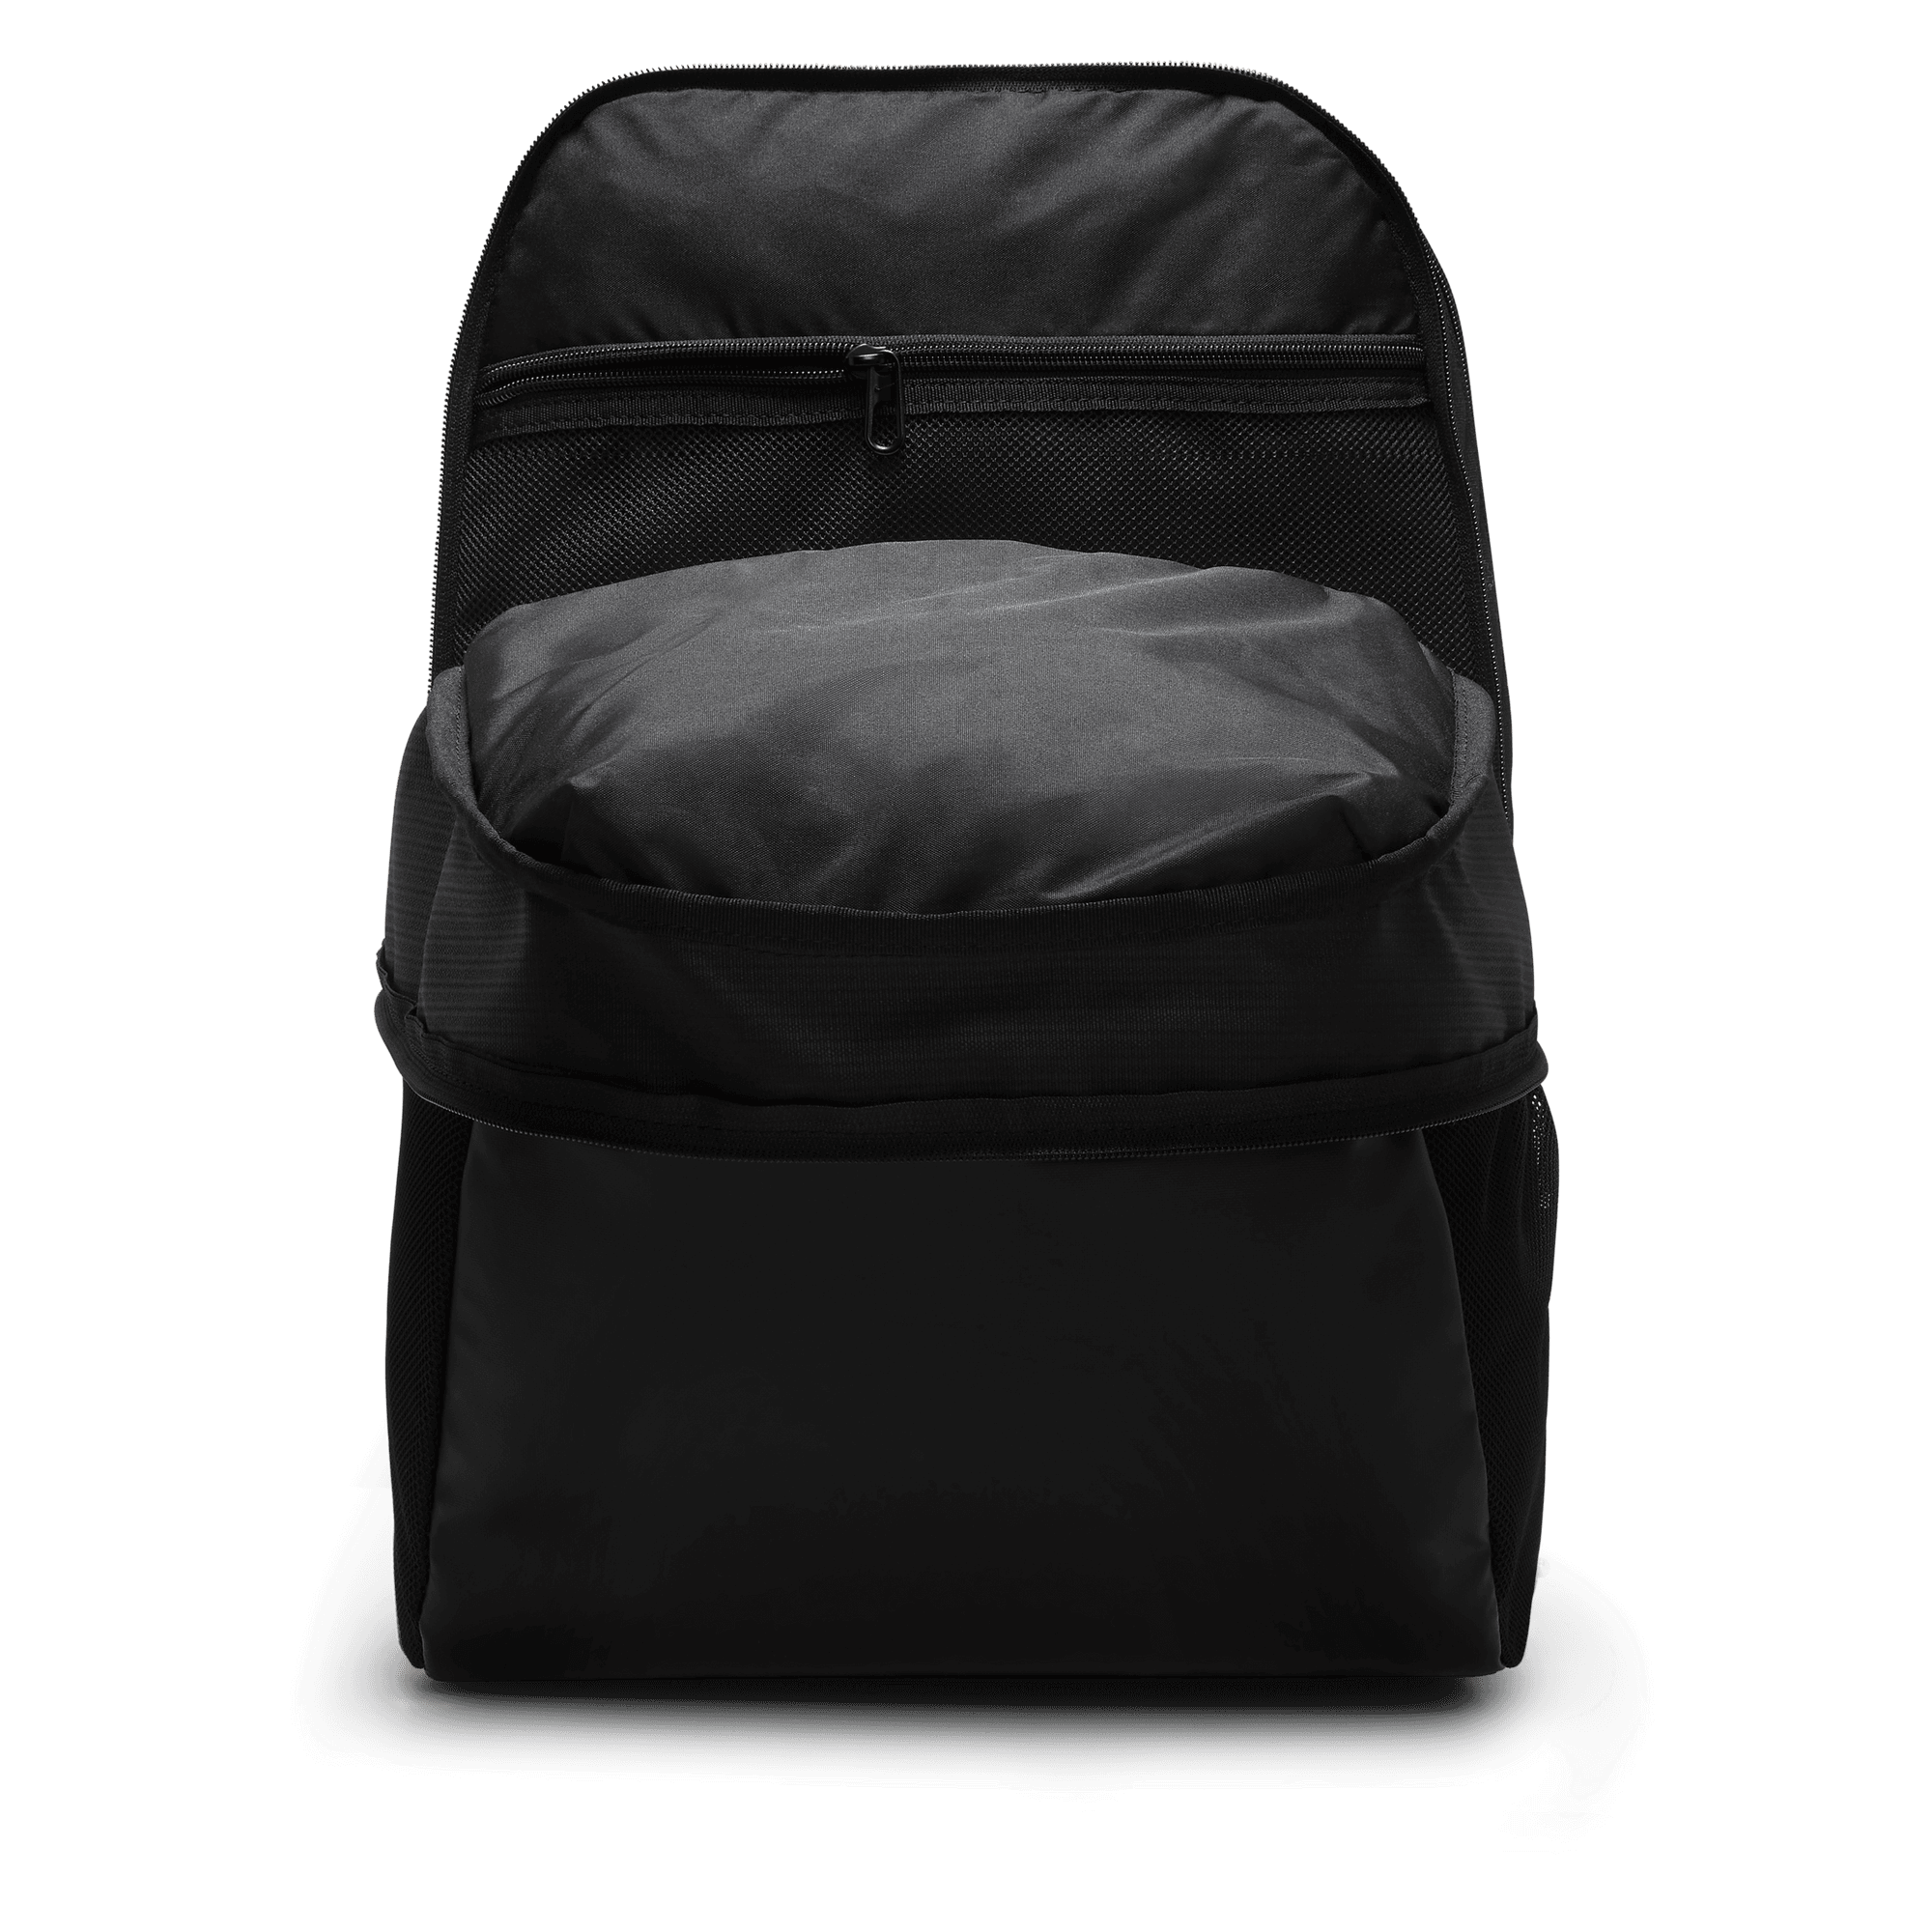 Brasilia 9.5 Training Backpack (30L) from Nike